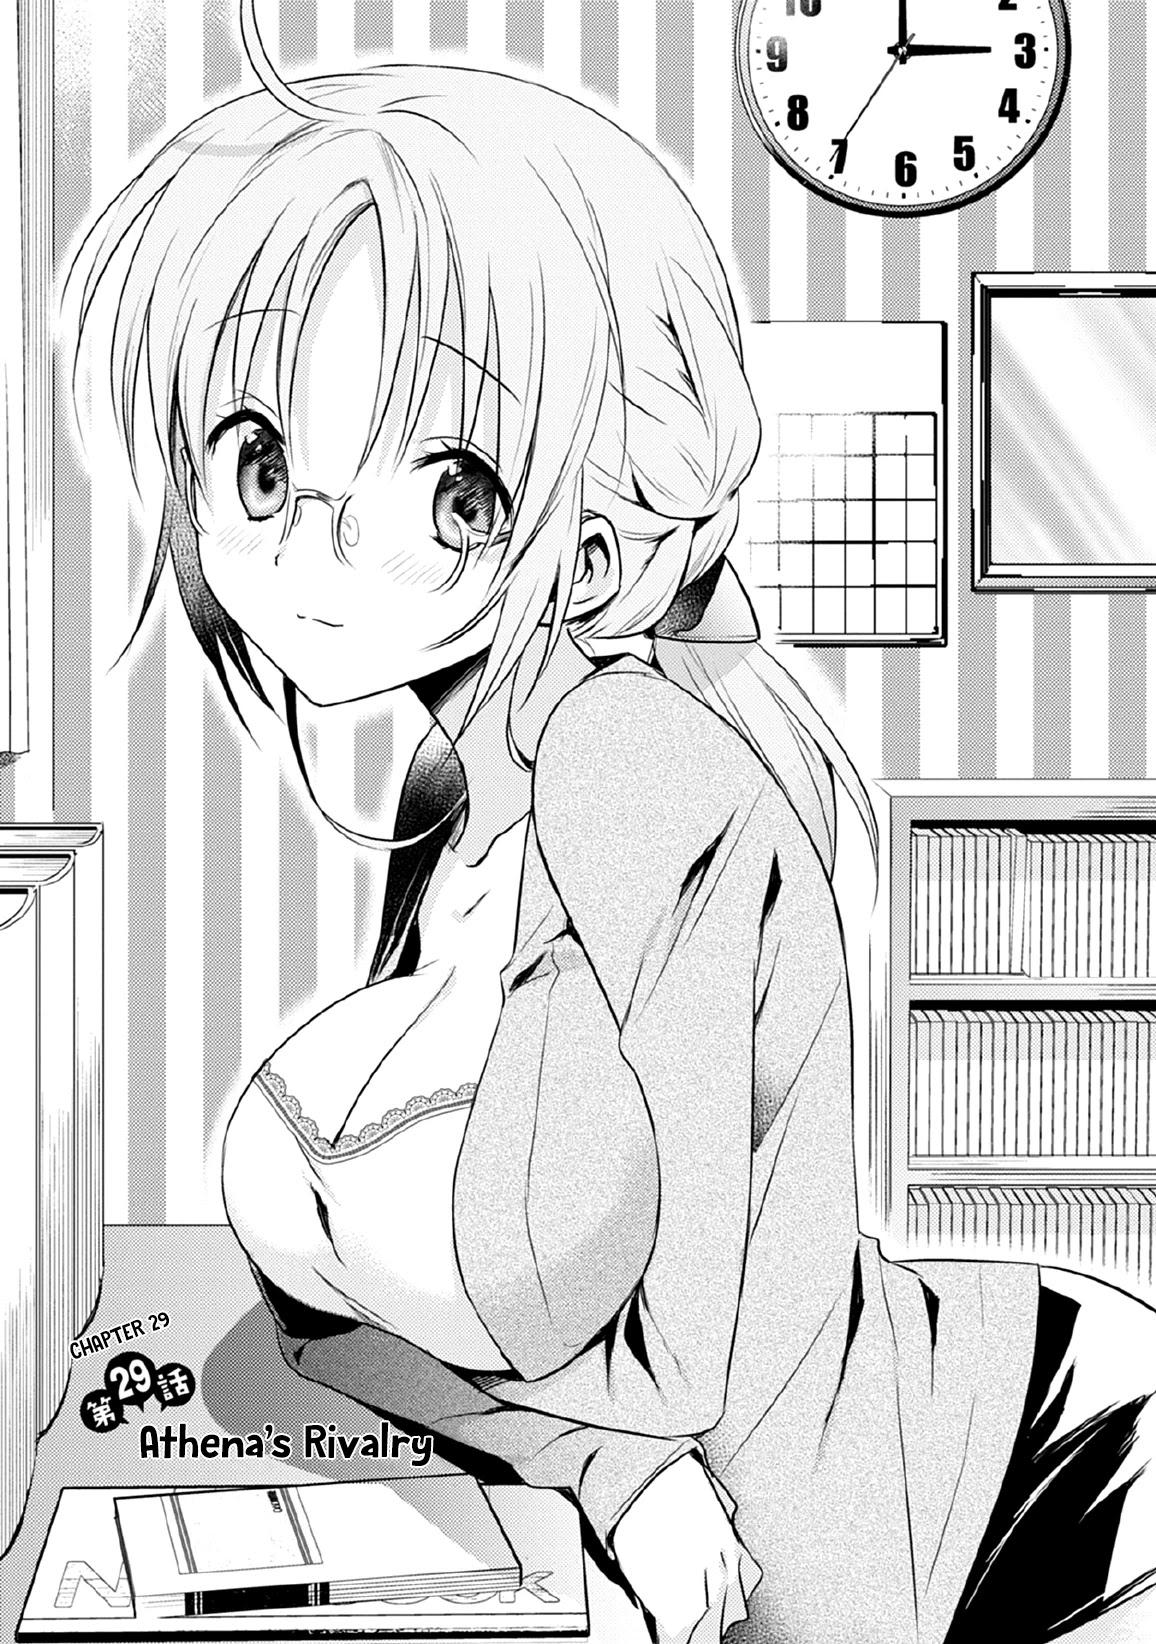 Megami-ryou no Ryoubo-kun. Capítulo 26 - Manga Online